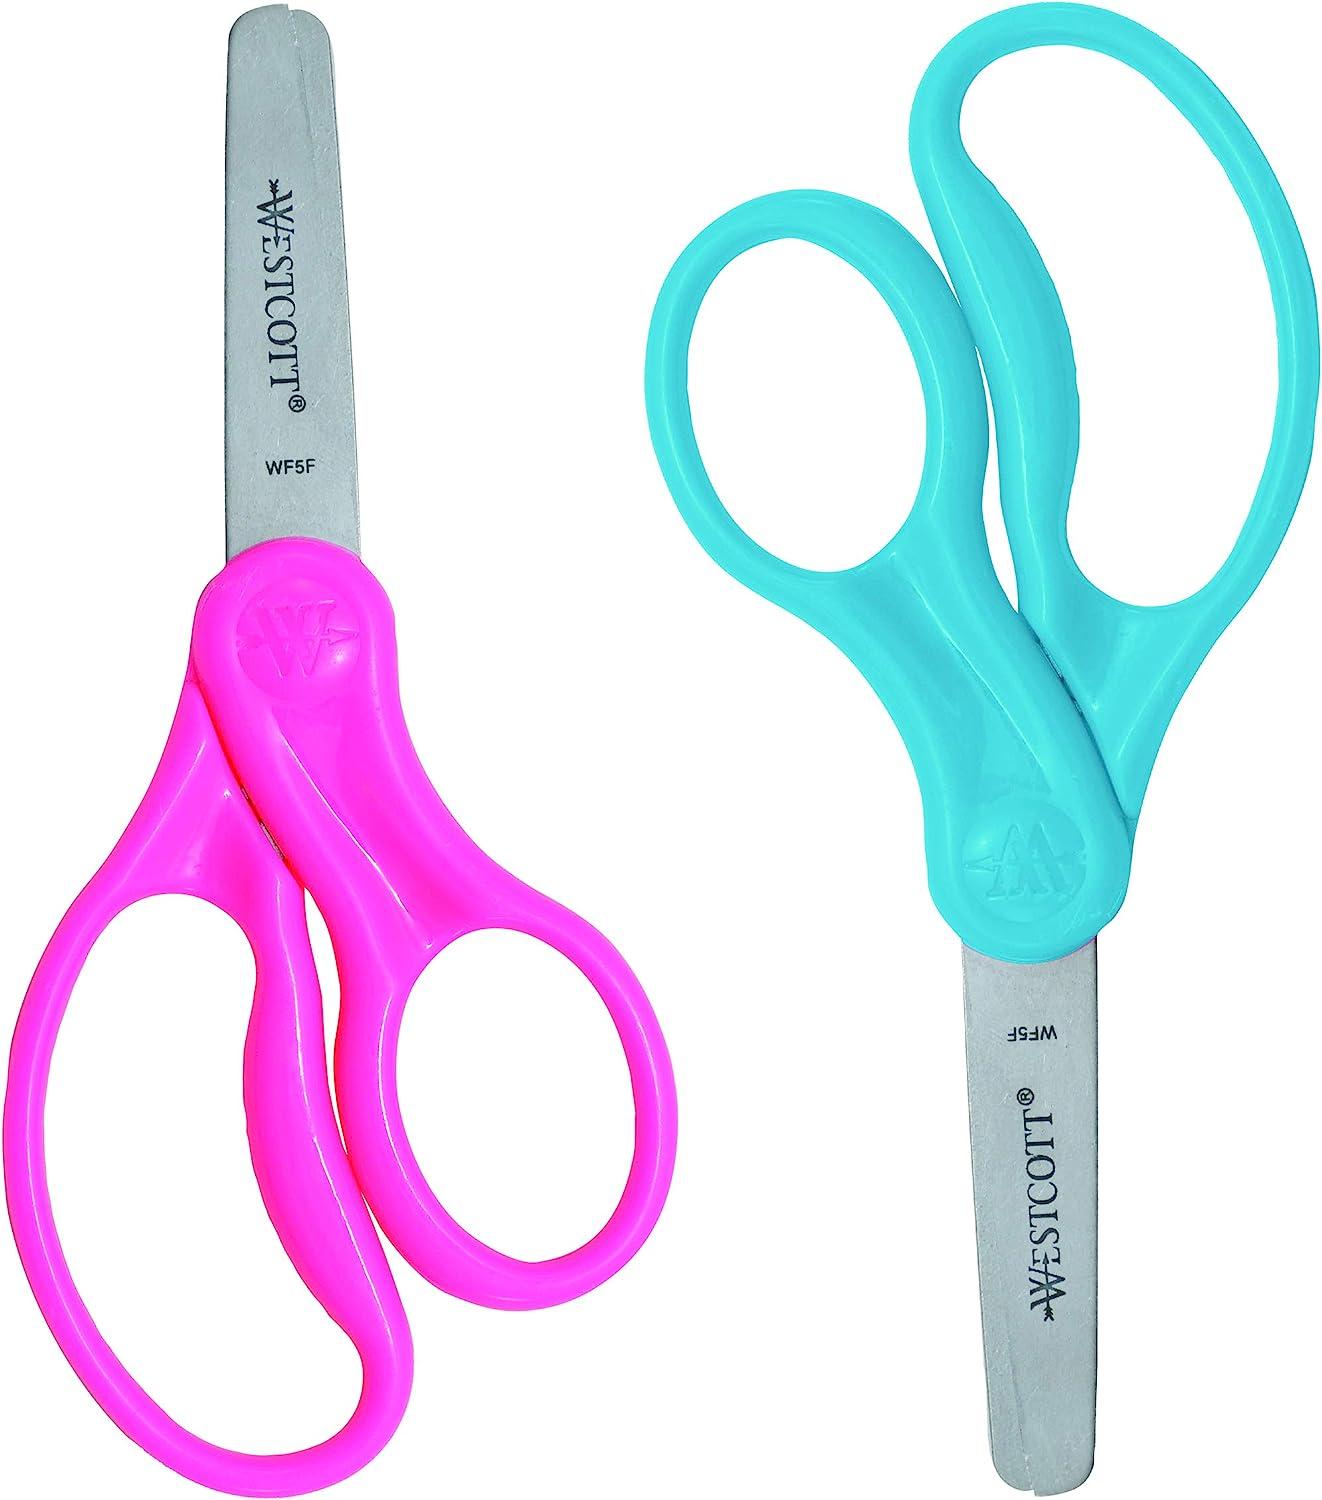 Left-Handed Pointed Tip 5 Scissors